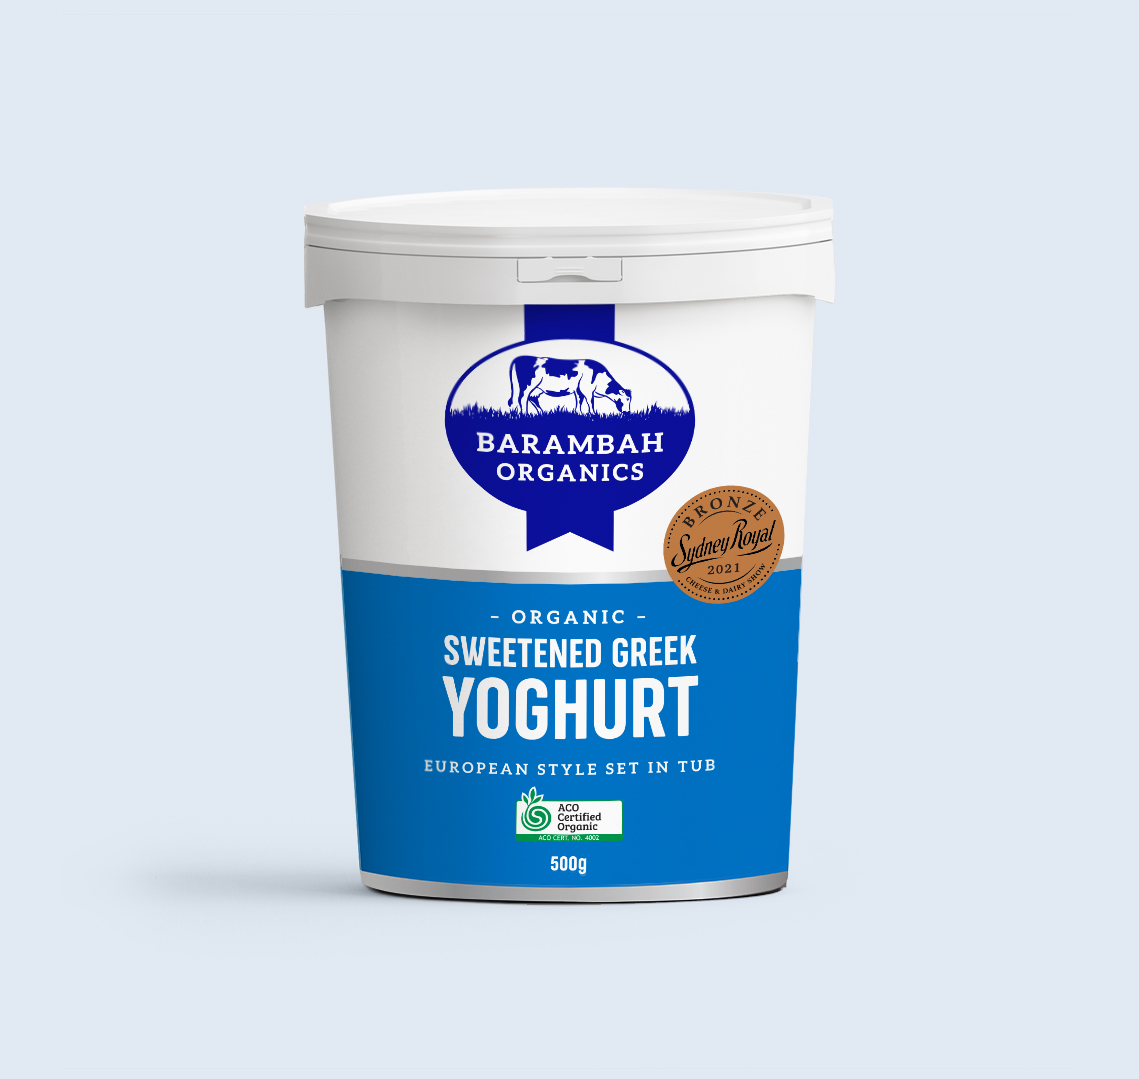 500g of Sweetened Greek Yoghurt - Organic Yoghurt - Barambah Organics